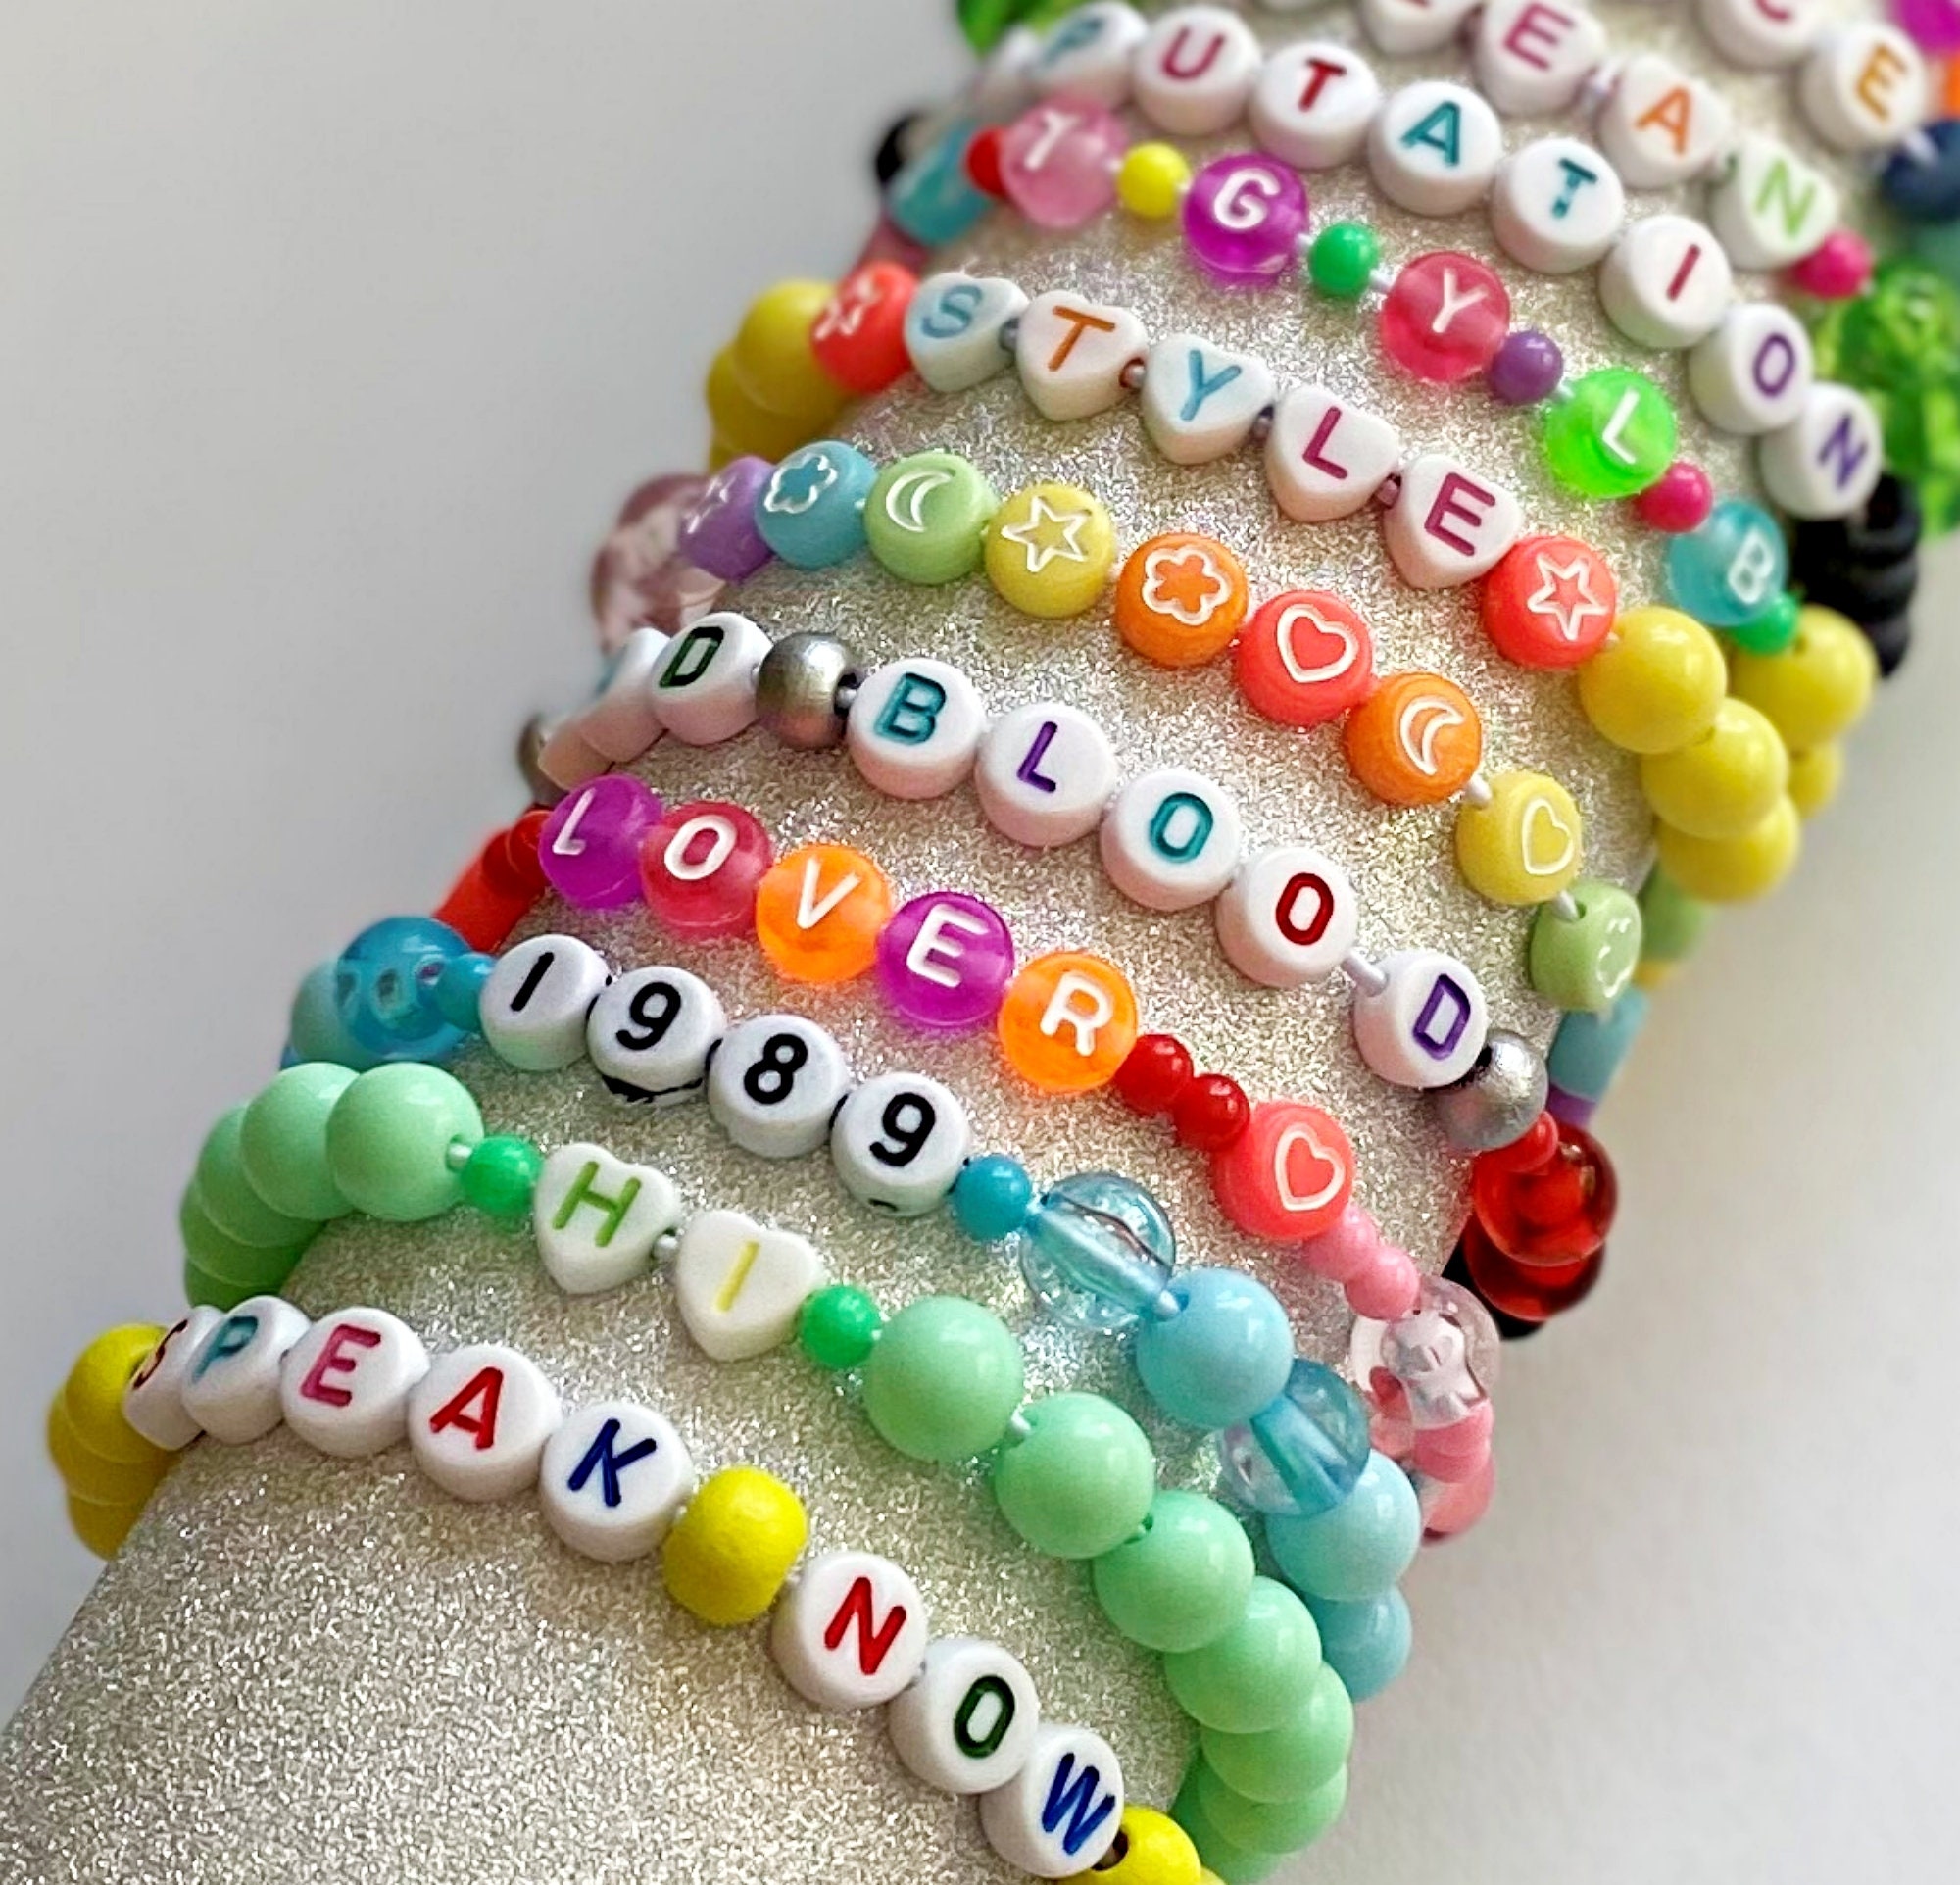 Dainty bracelet - pastel glass beads - creations by cherie